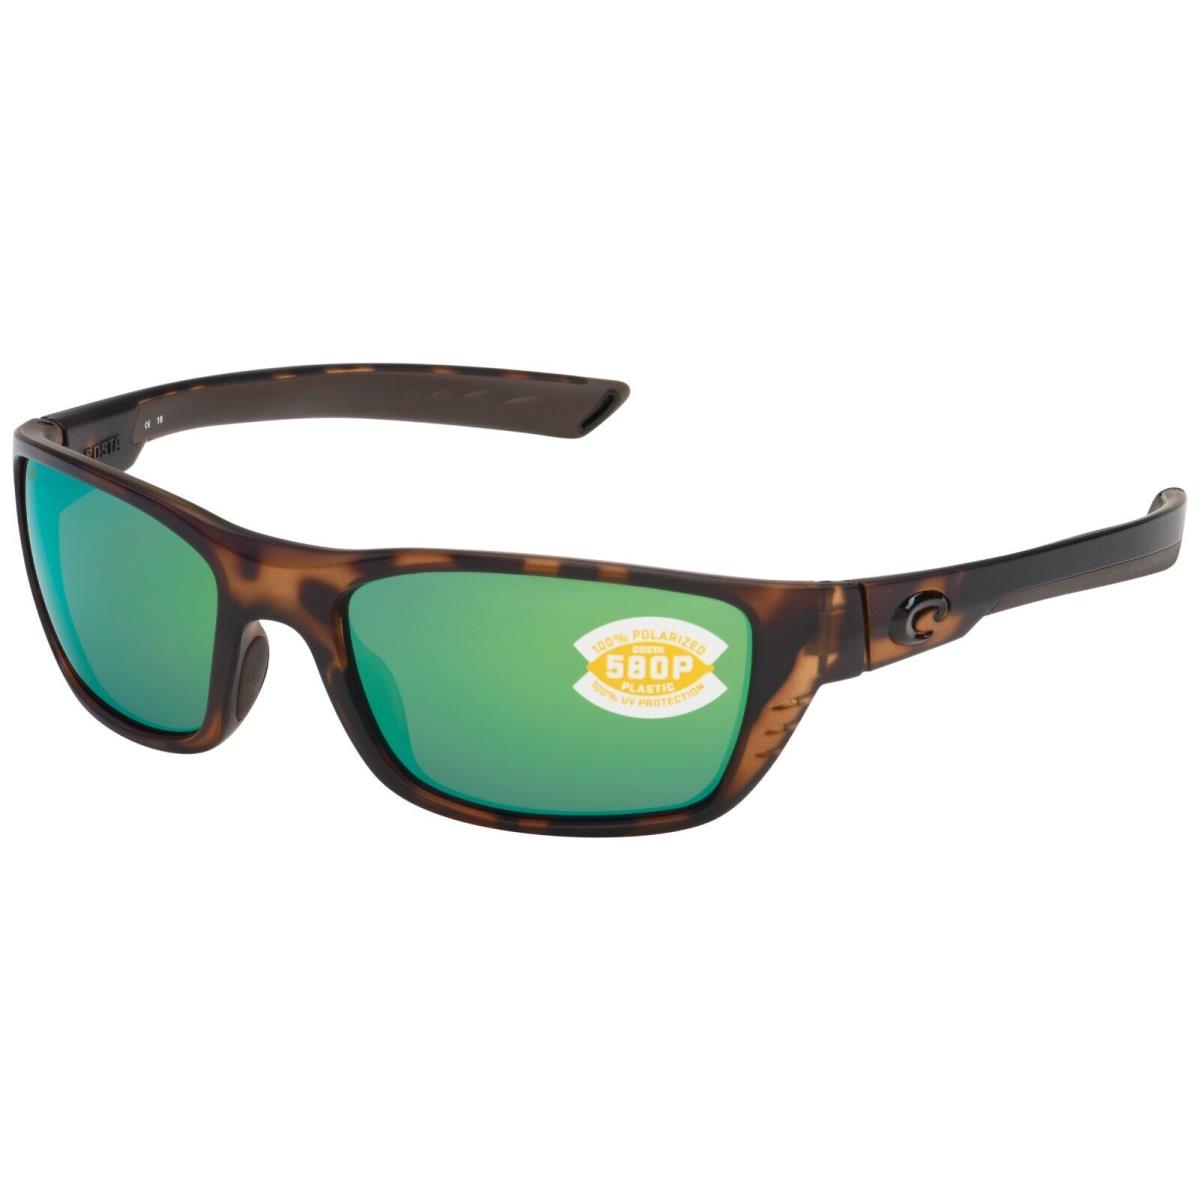 Costa Del Mar Wtp 66 Ogmp Whitetip Sunglasses Green Mirror 580P Polarized 58mm - Frame: Retro Tortoise, Lens: Green